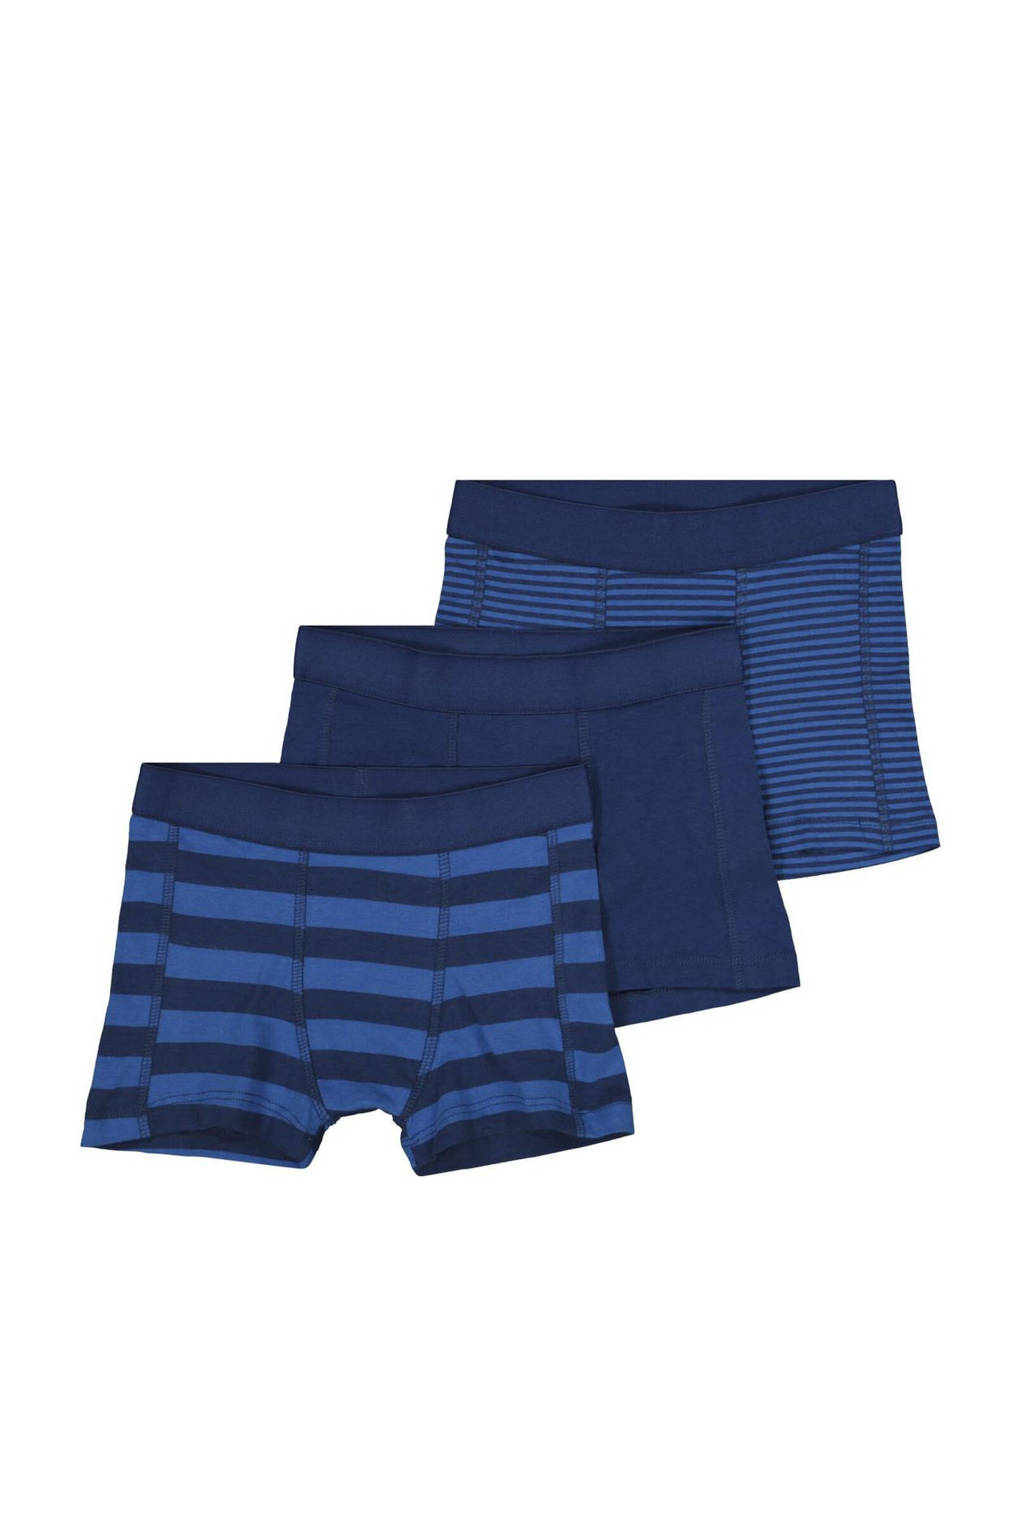 HEMA   boxershort - set van 3 streep blauw, Blauw